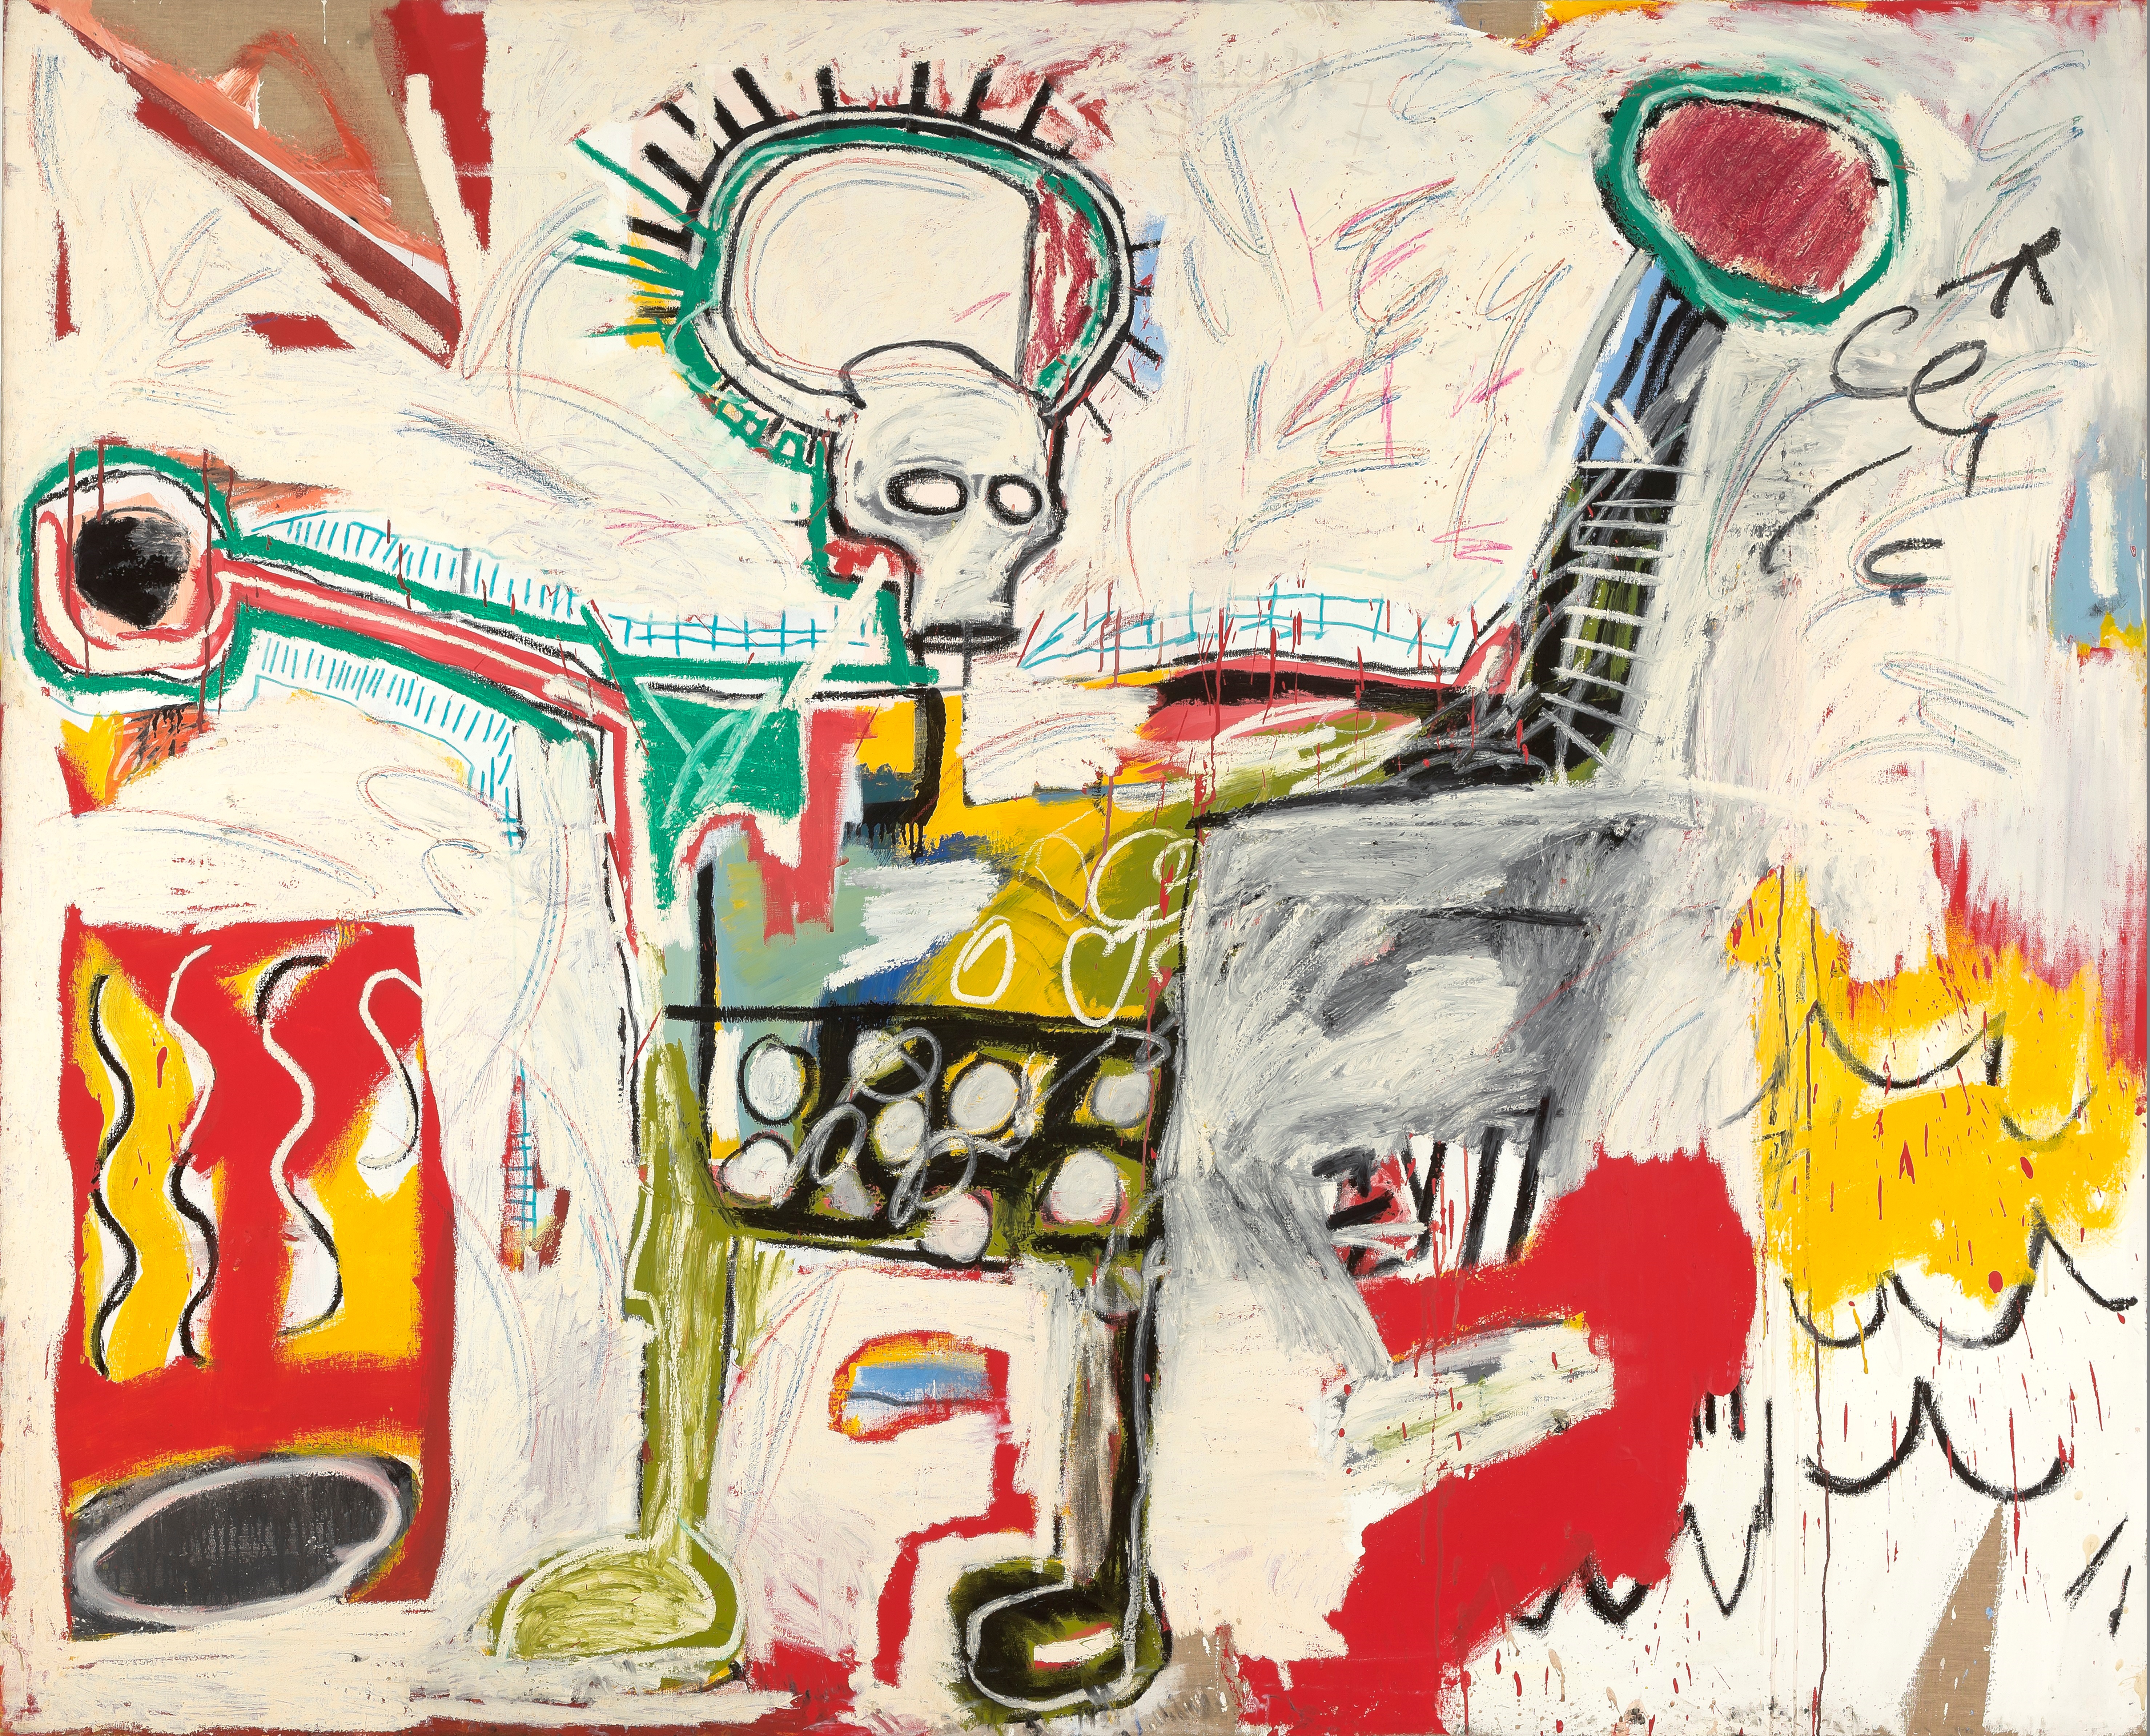 Jean-Michel Basquiat, Untitled 1982, Museum Boijmans Van Beuningen, Studio Tromp, Rotterdam
© The Estate of Jean - Michel Basquiat, Licensed by Artestar, New York